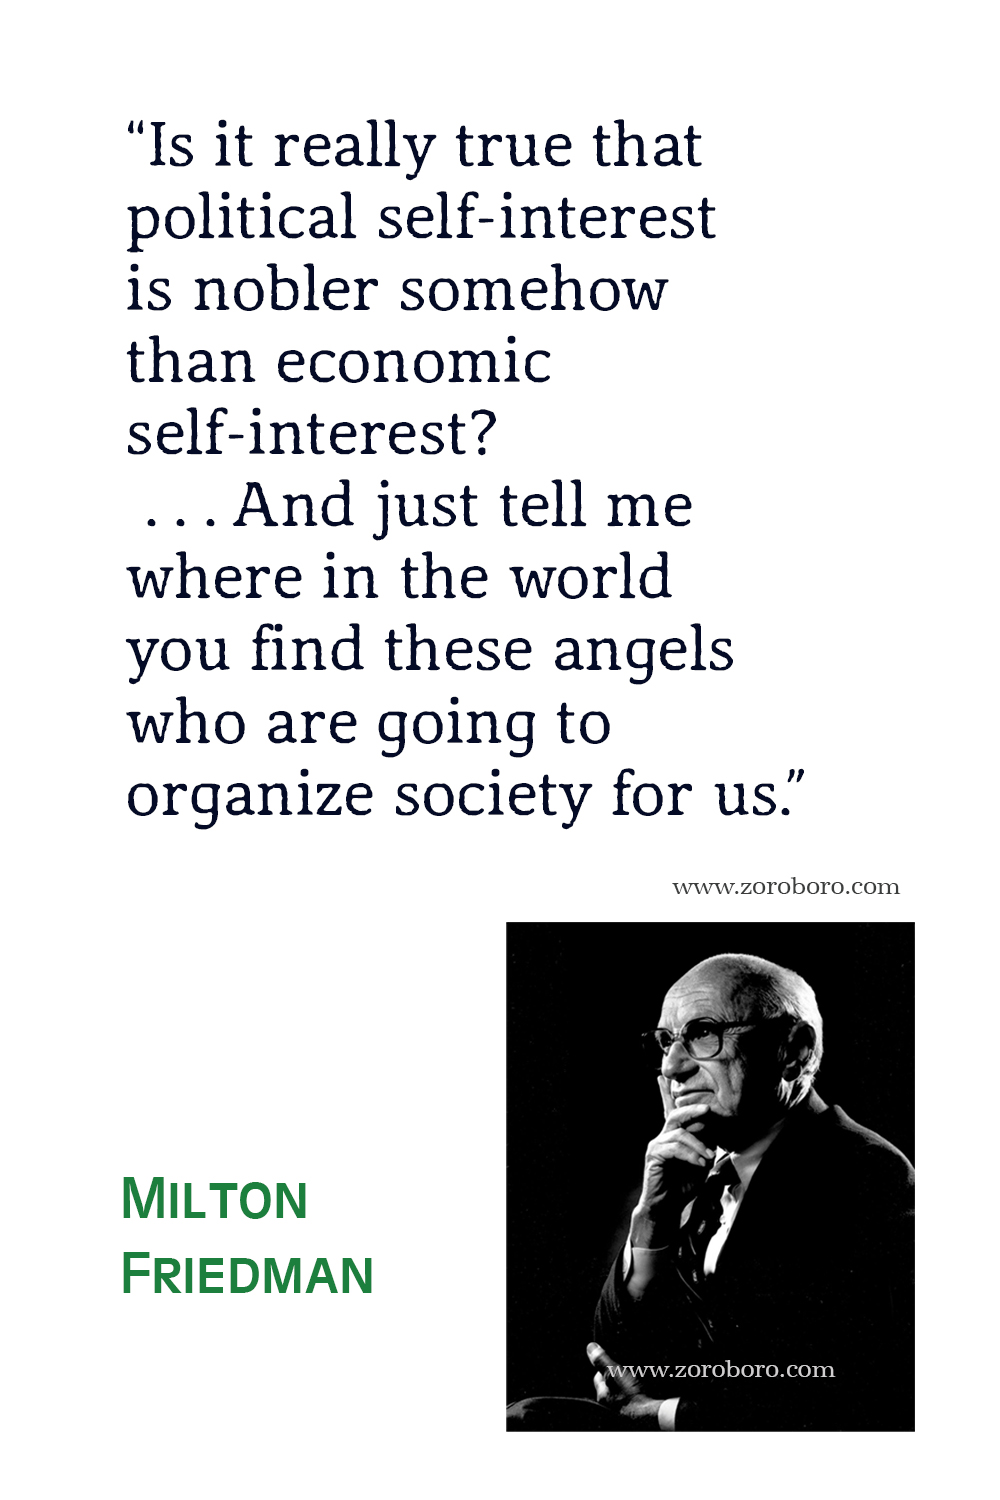 Milton Friedman Quotes, Free to Choose Quotes, Milton Friedman Capitalism and Freedom Quotes, Milton Friedman Theory, Economics & Money.